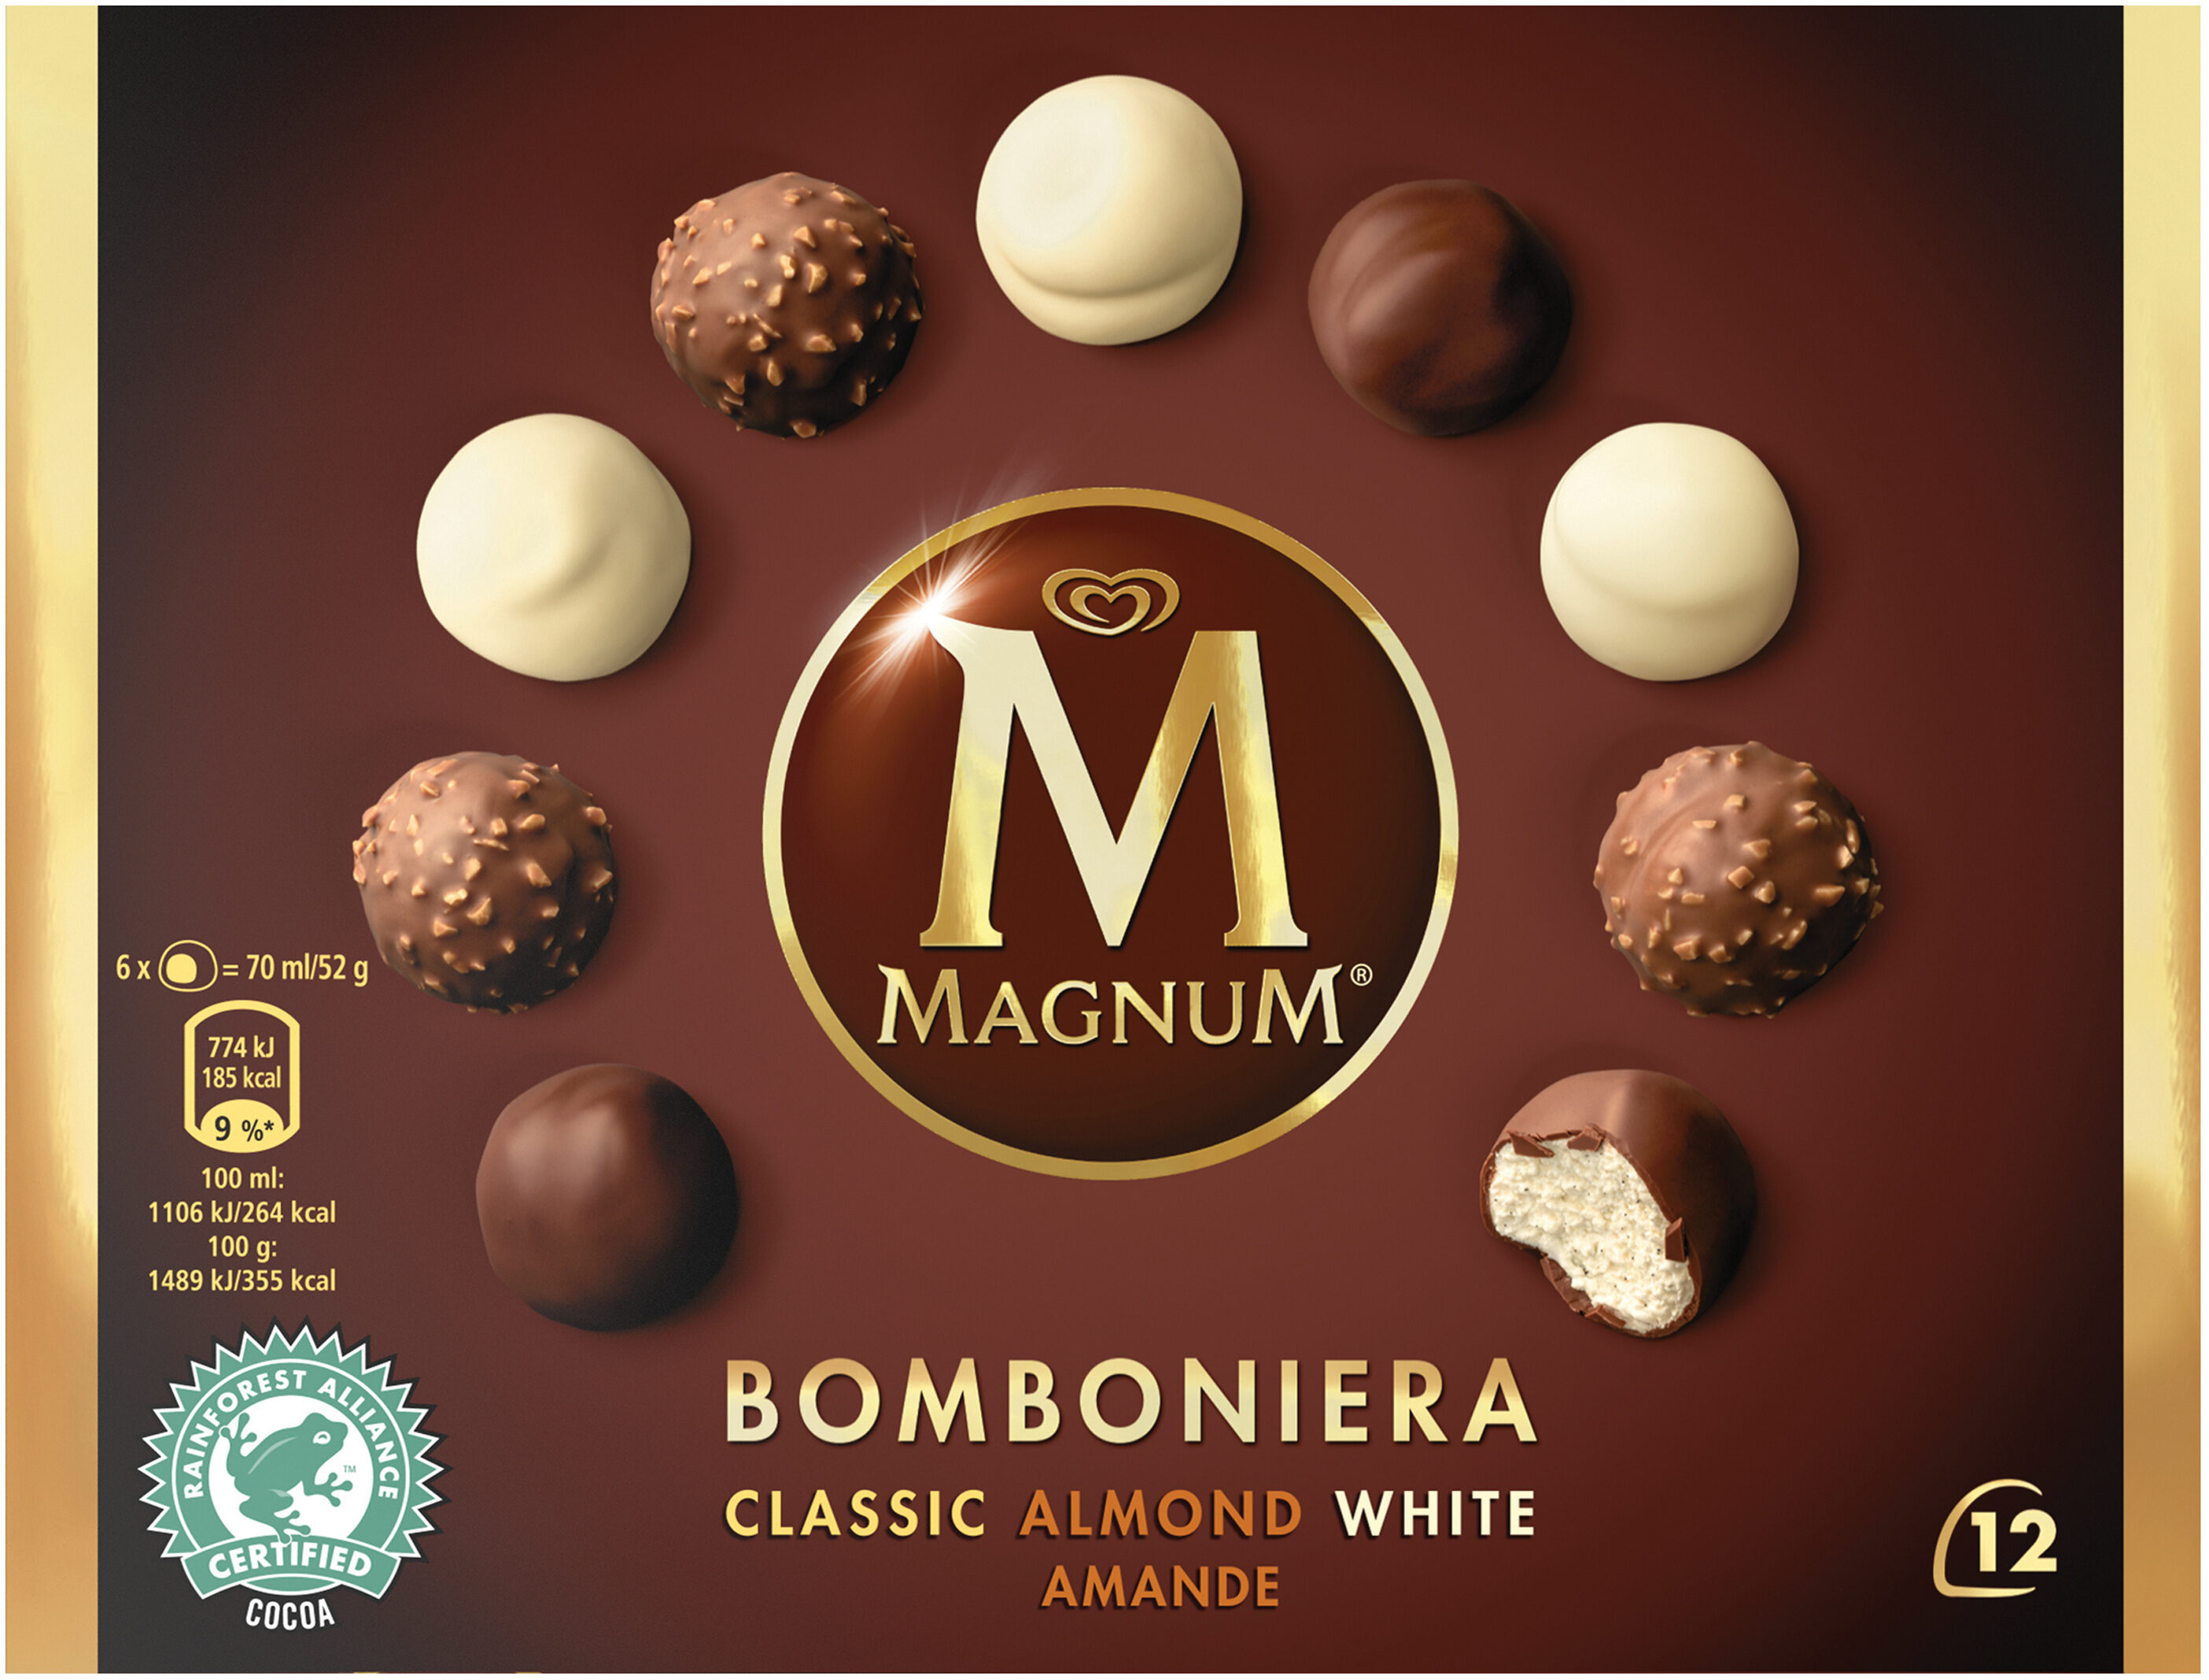 Bomboniera Classic Almond White - Product - fr